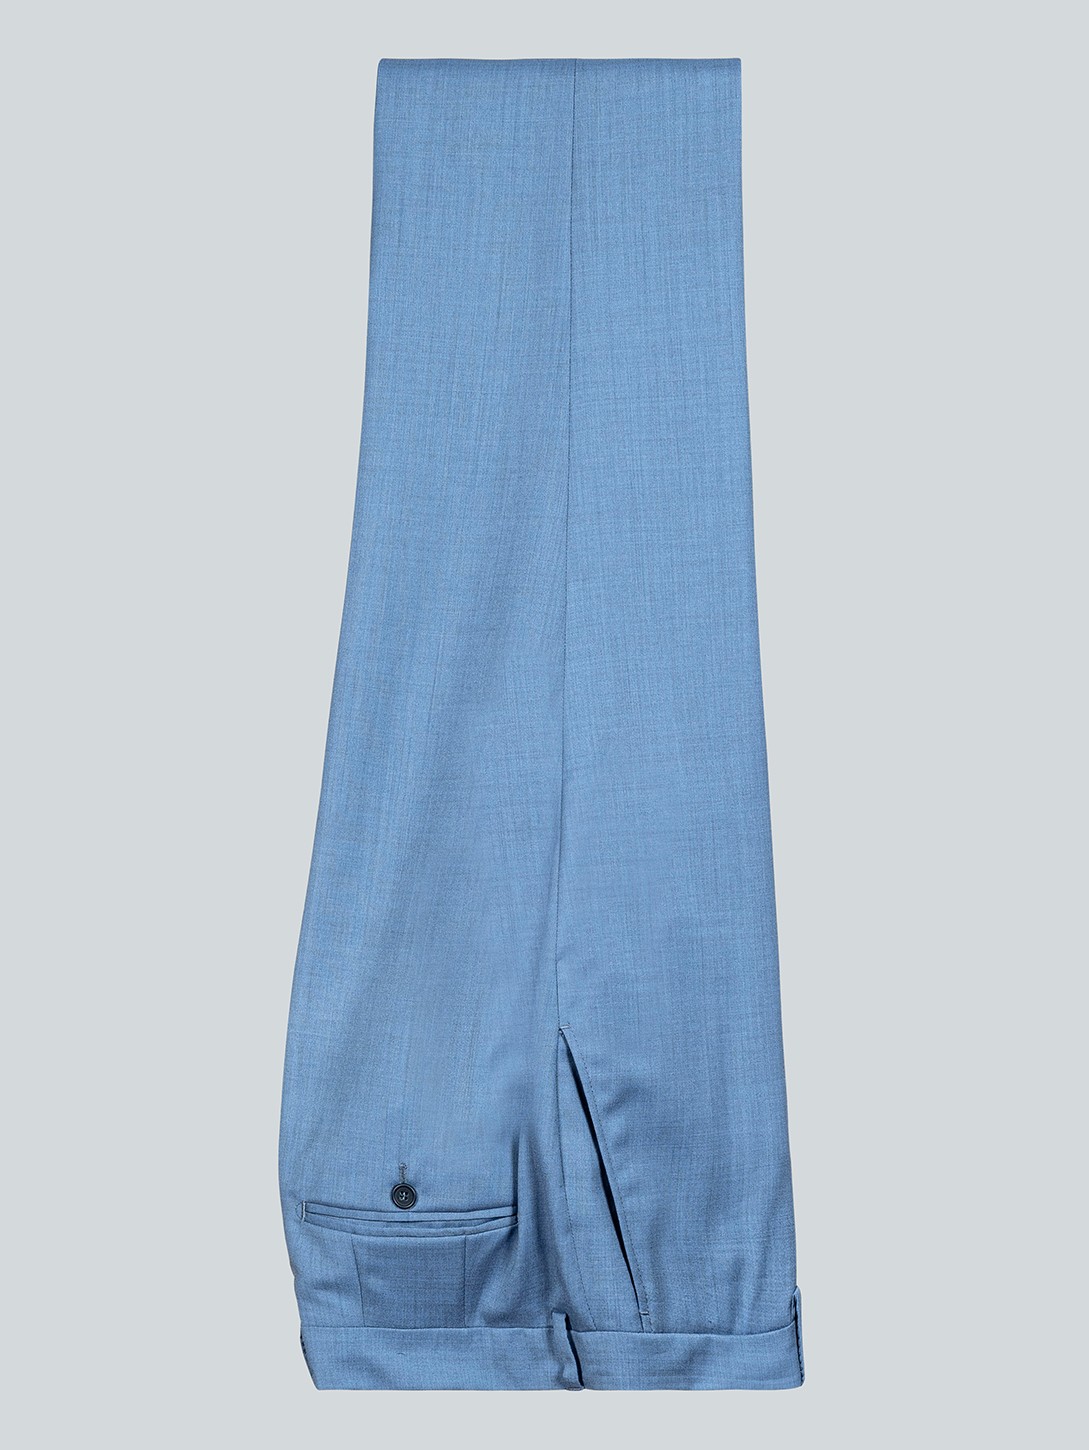 Pantalon de costume bleu